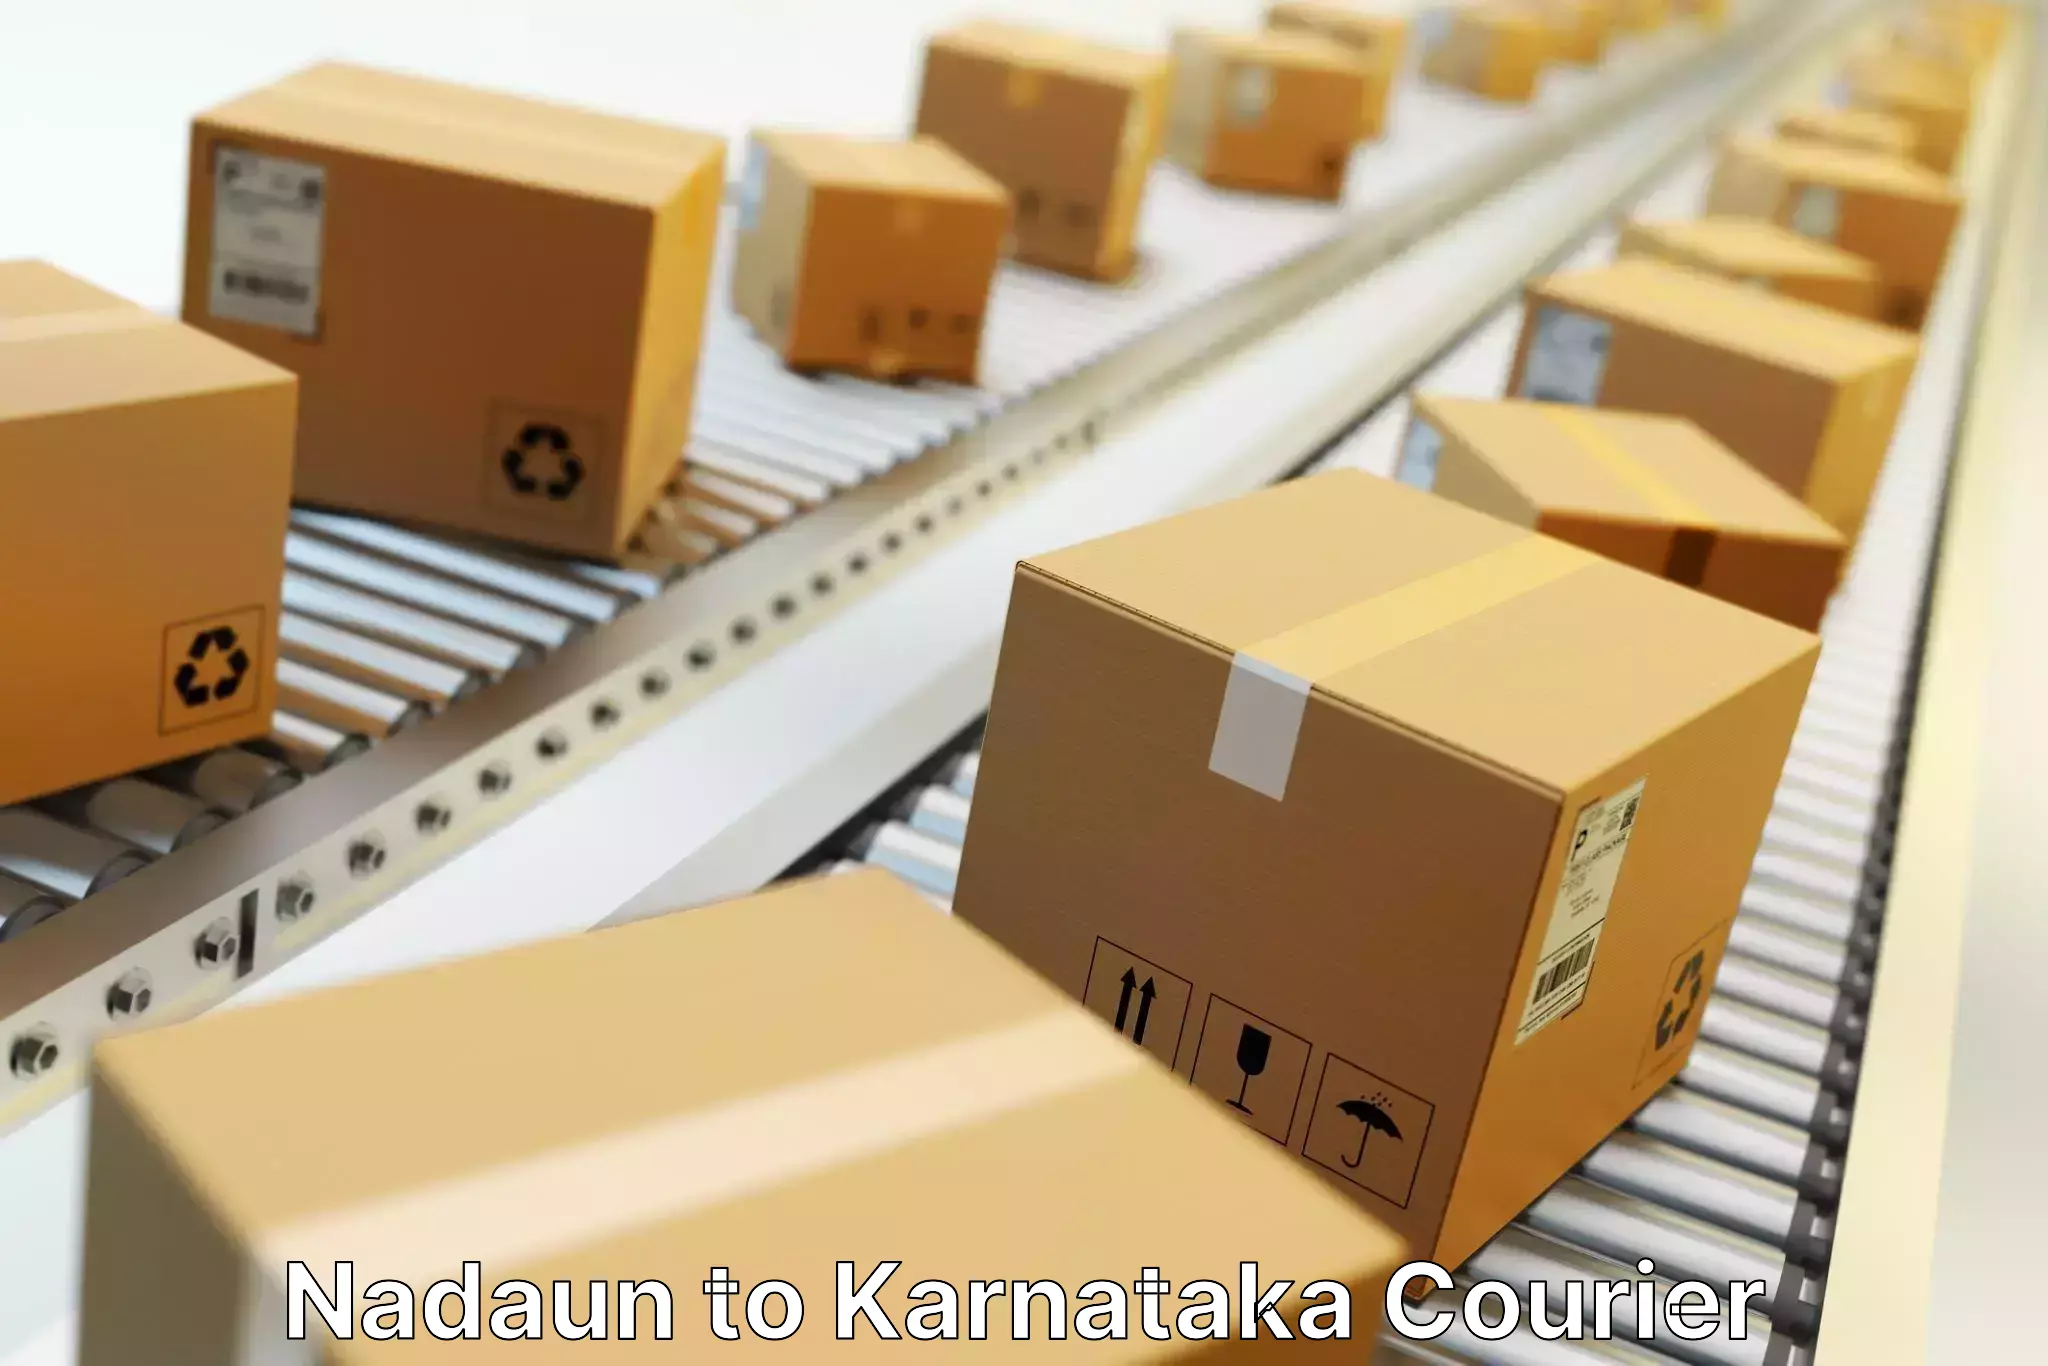 State-of-the-art courier technology Nadaun to Karnataka